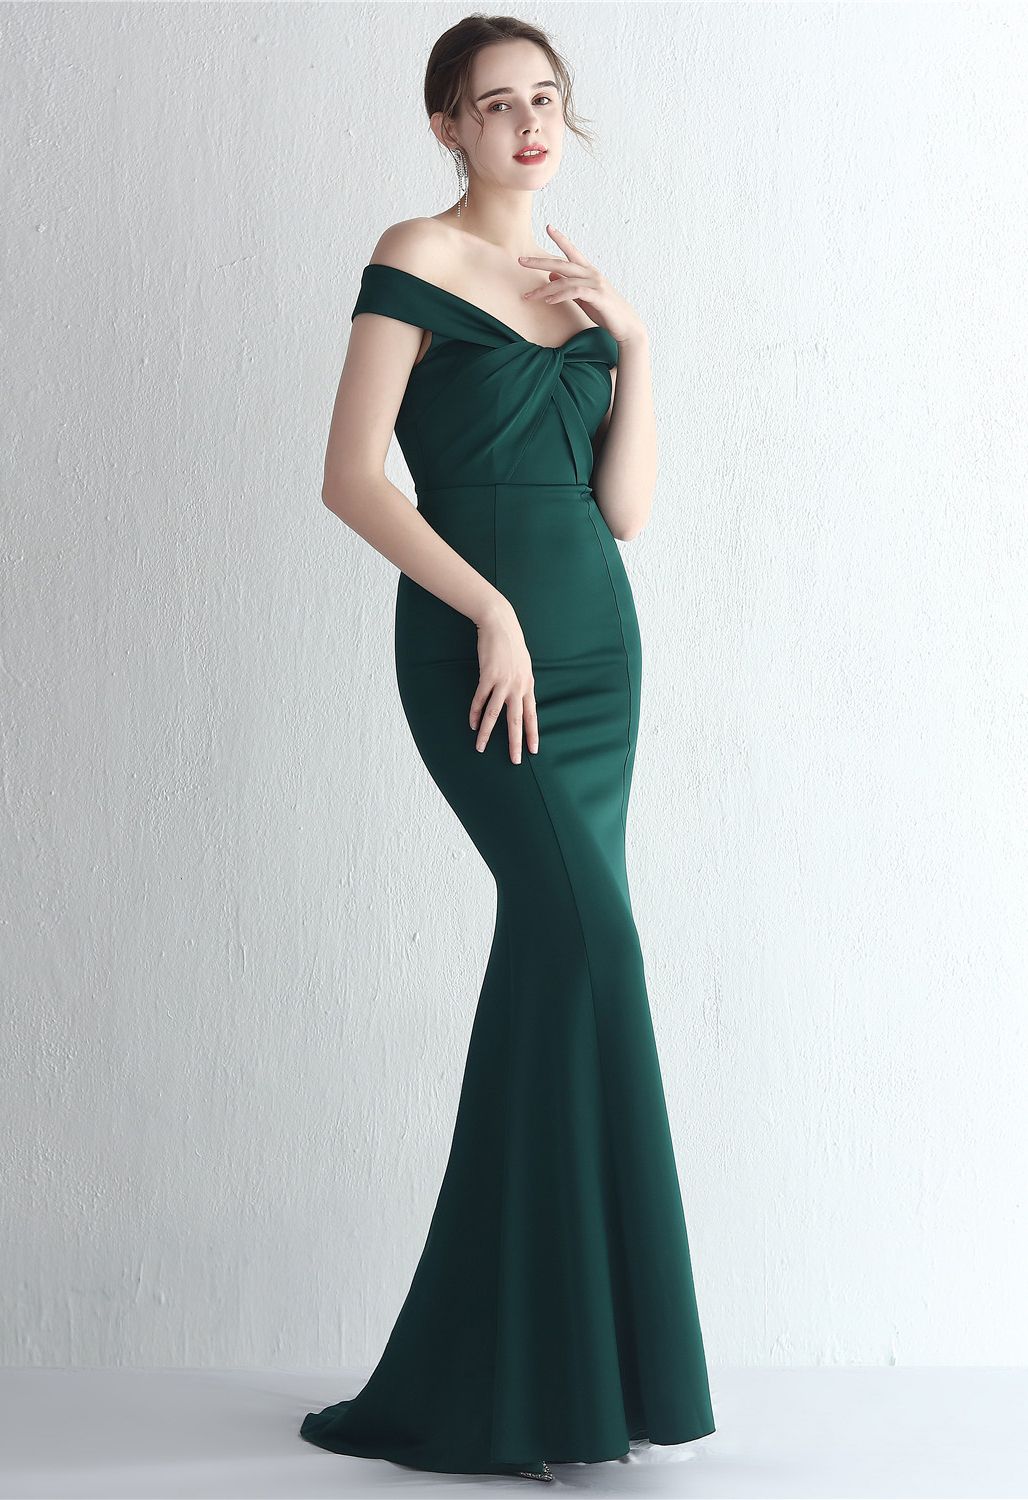 Twist Front Off-Shoulder Gown in Emerald